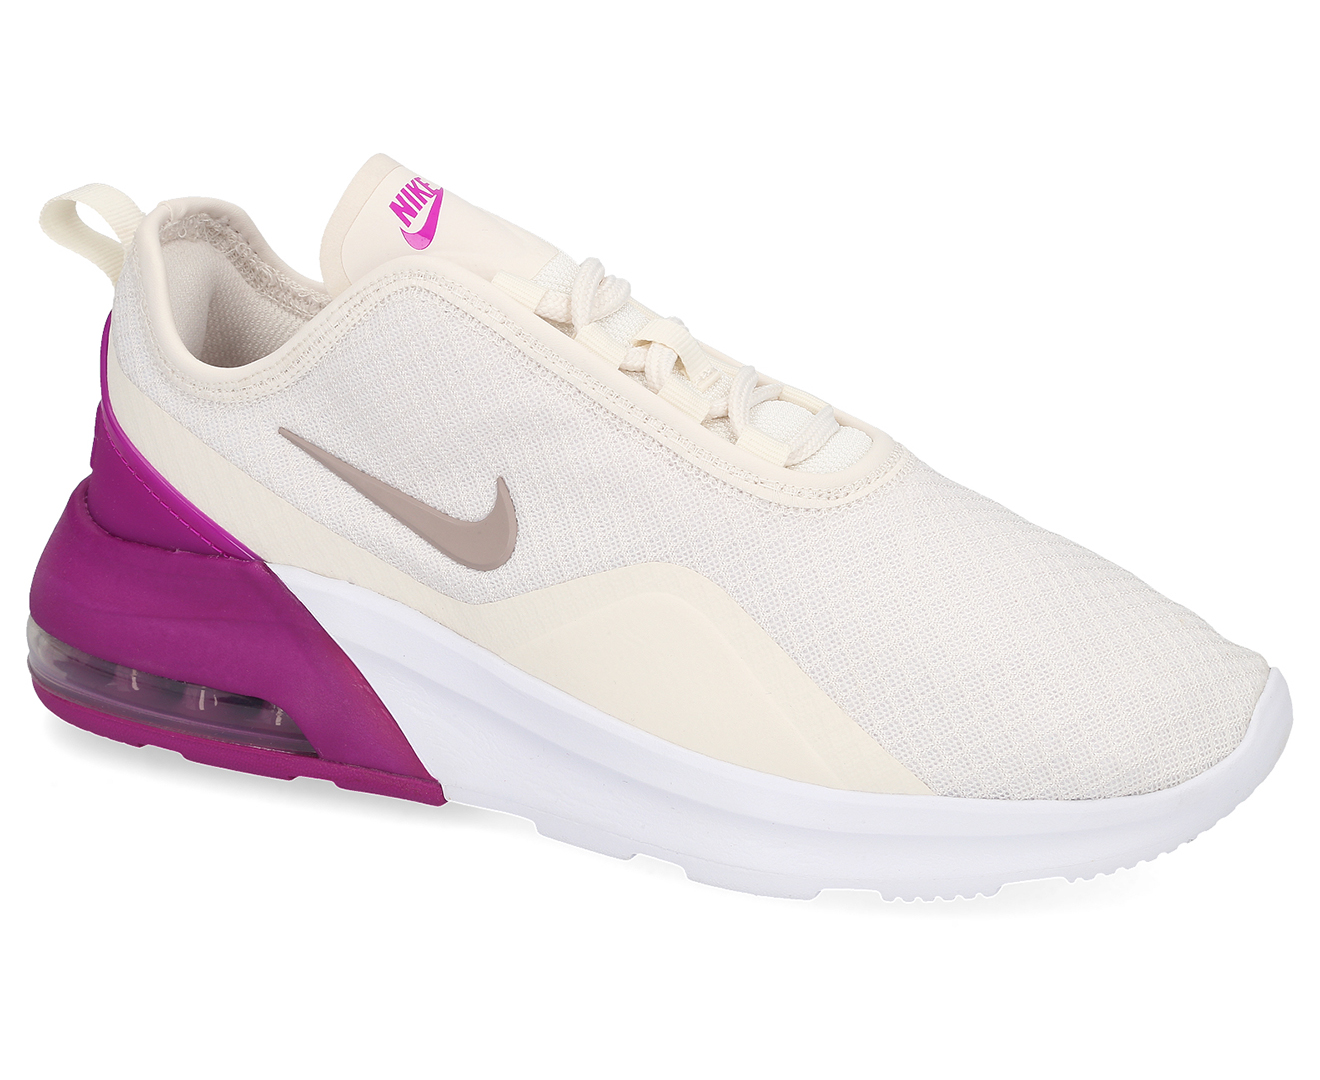 nike air max motion 2 women's sneakers pink